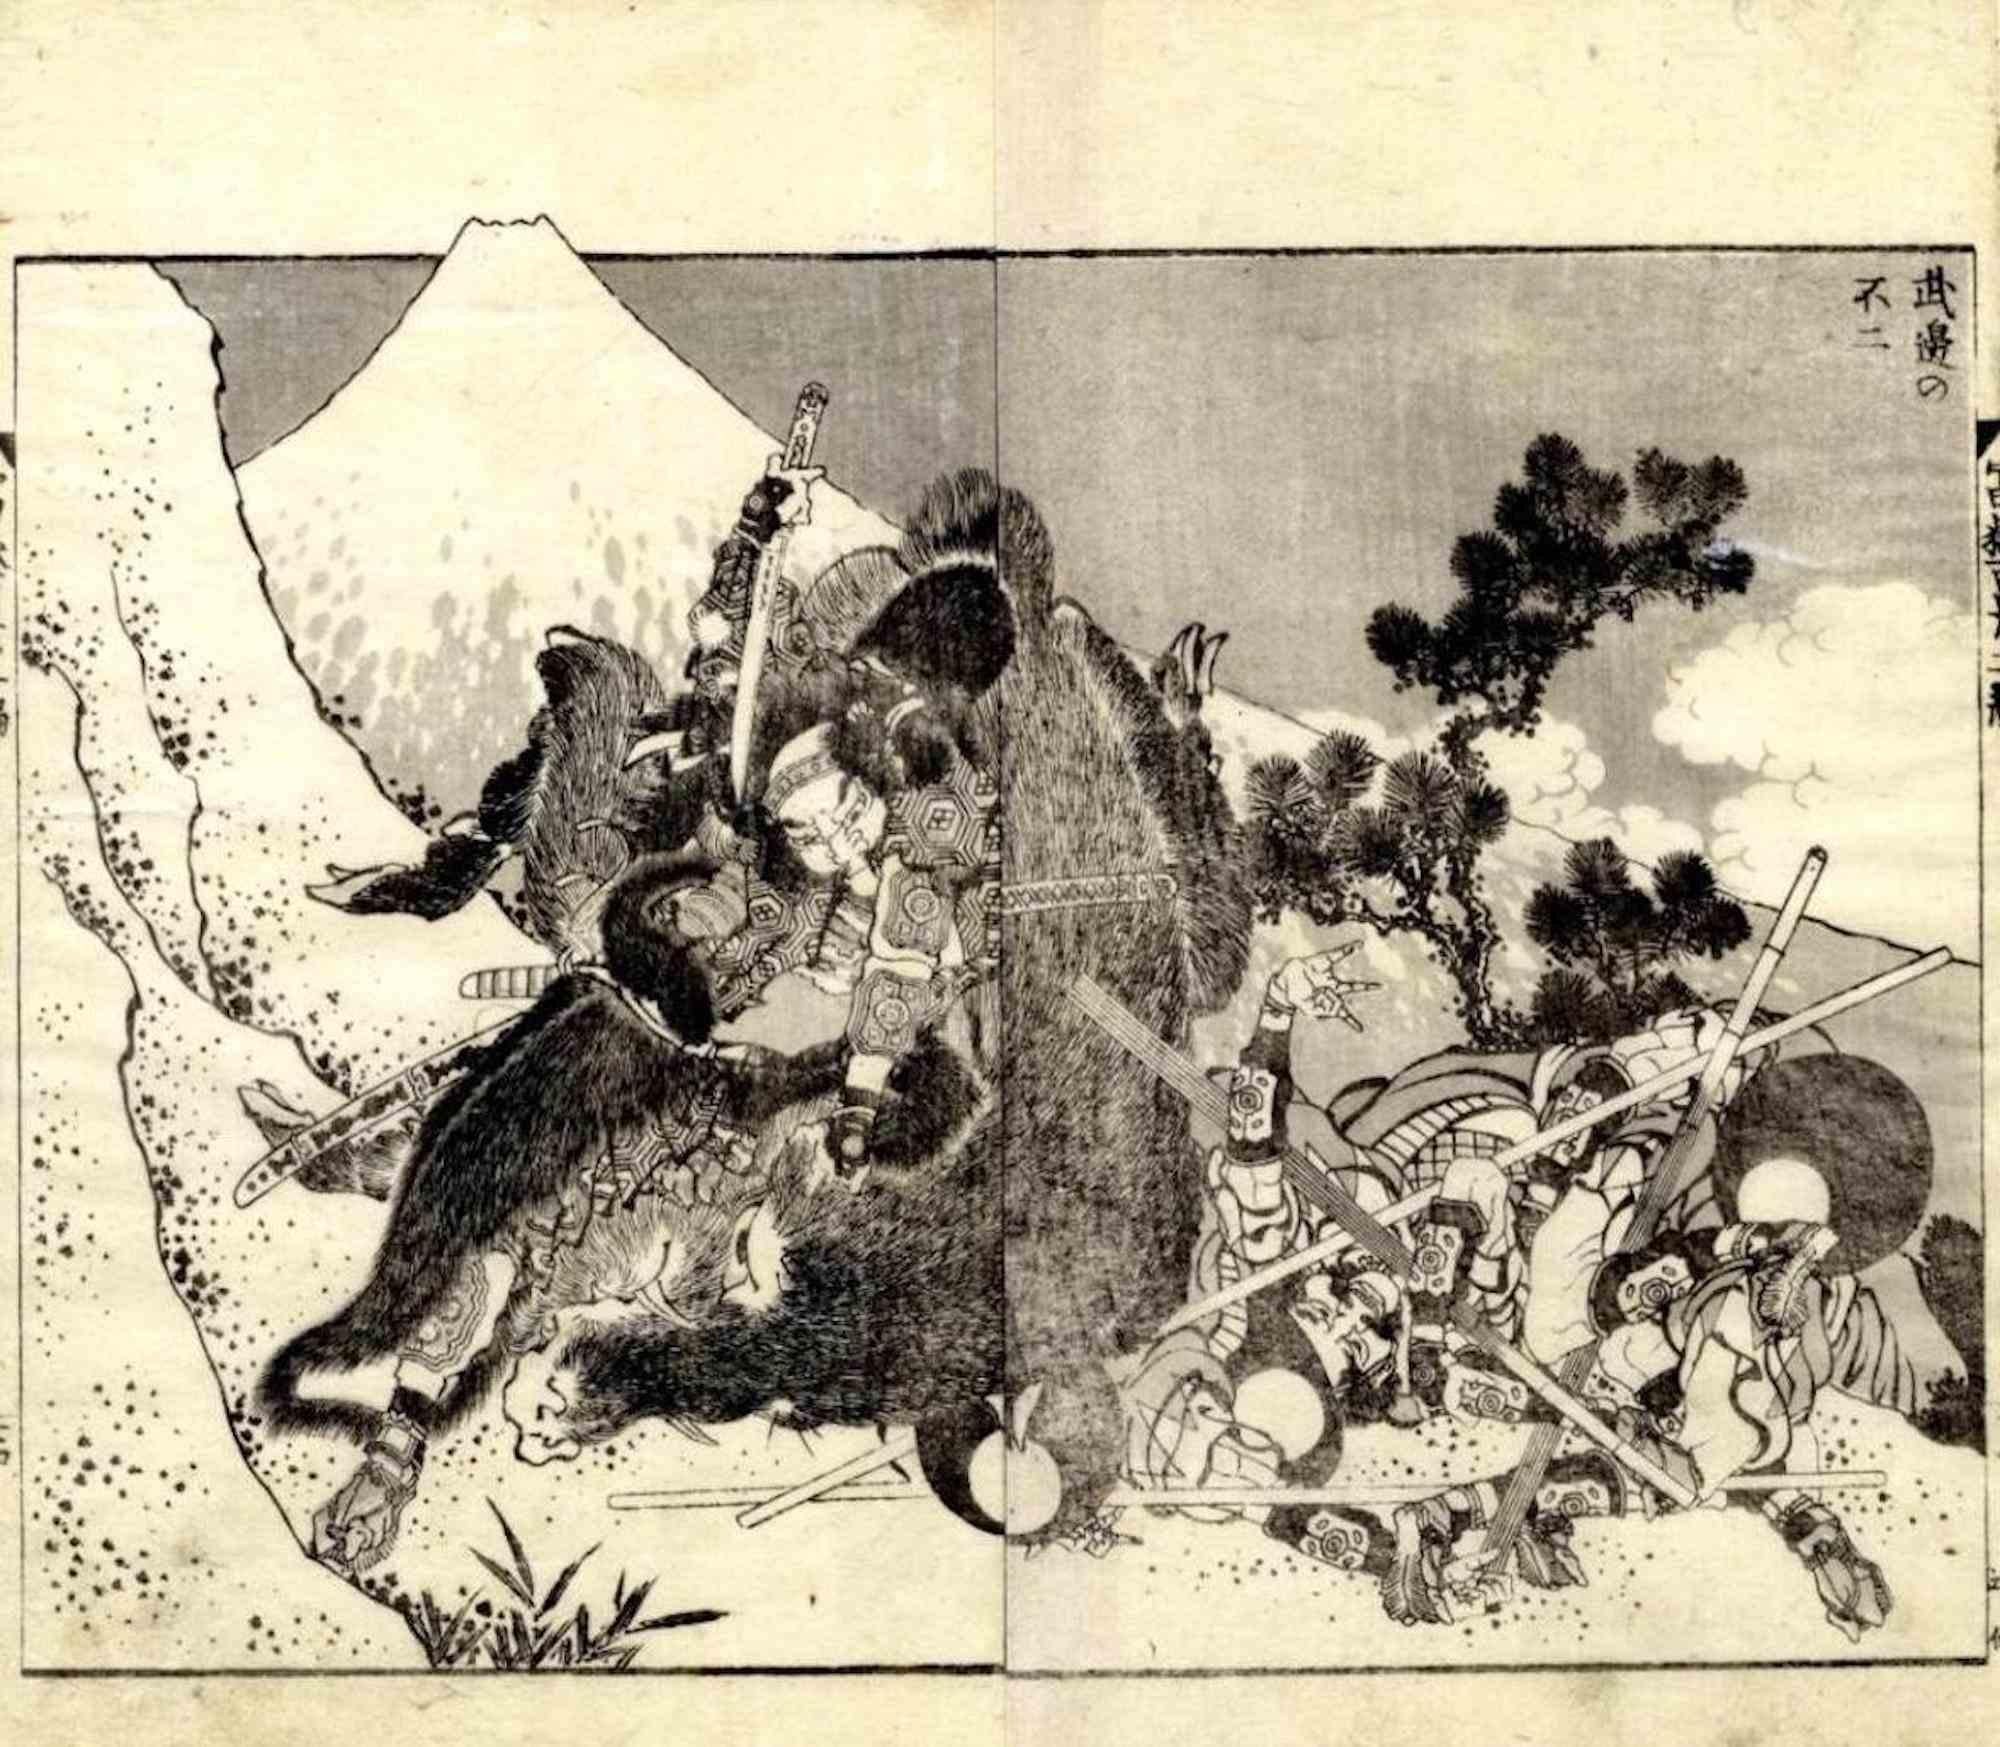 Warriors killing a Boar  - Original Woodcut Print by Katsushika Hokusai - 1835